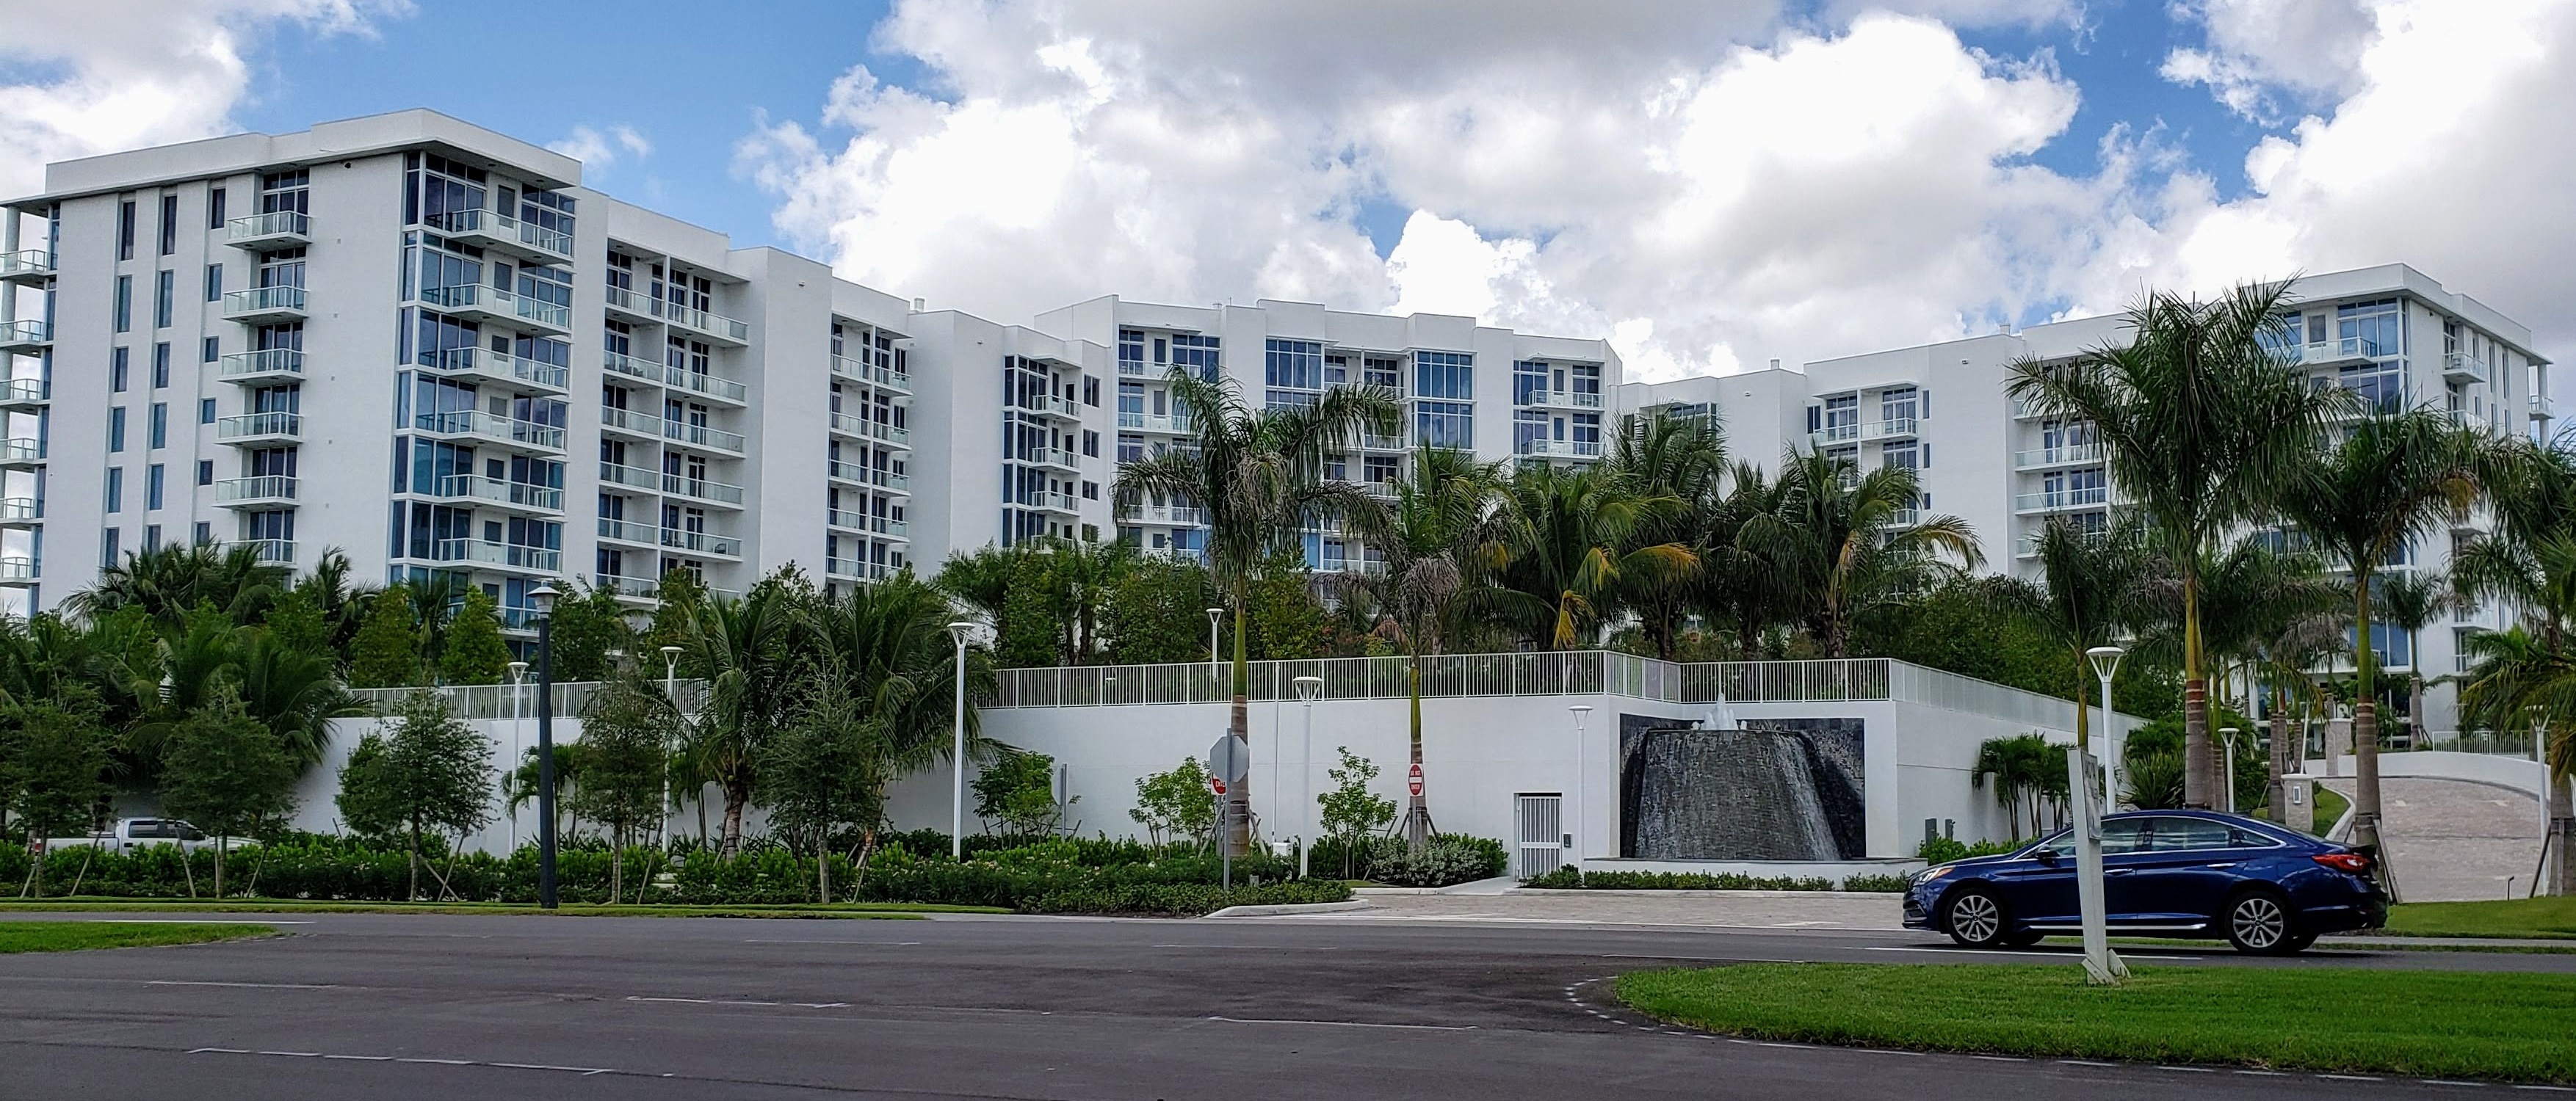 Boca Raton Akoya luxury condo construction in Boca West for Jean-Luc Andriot blog 090519